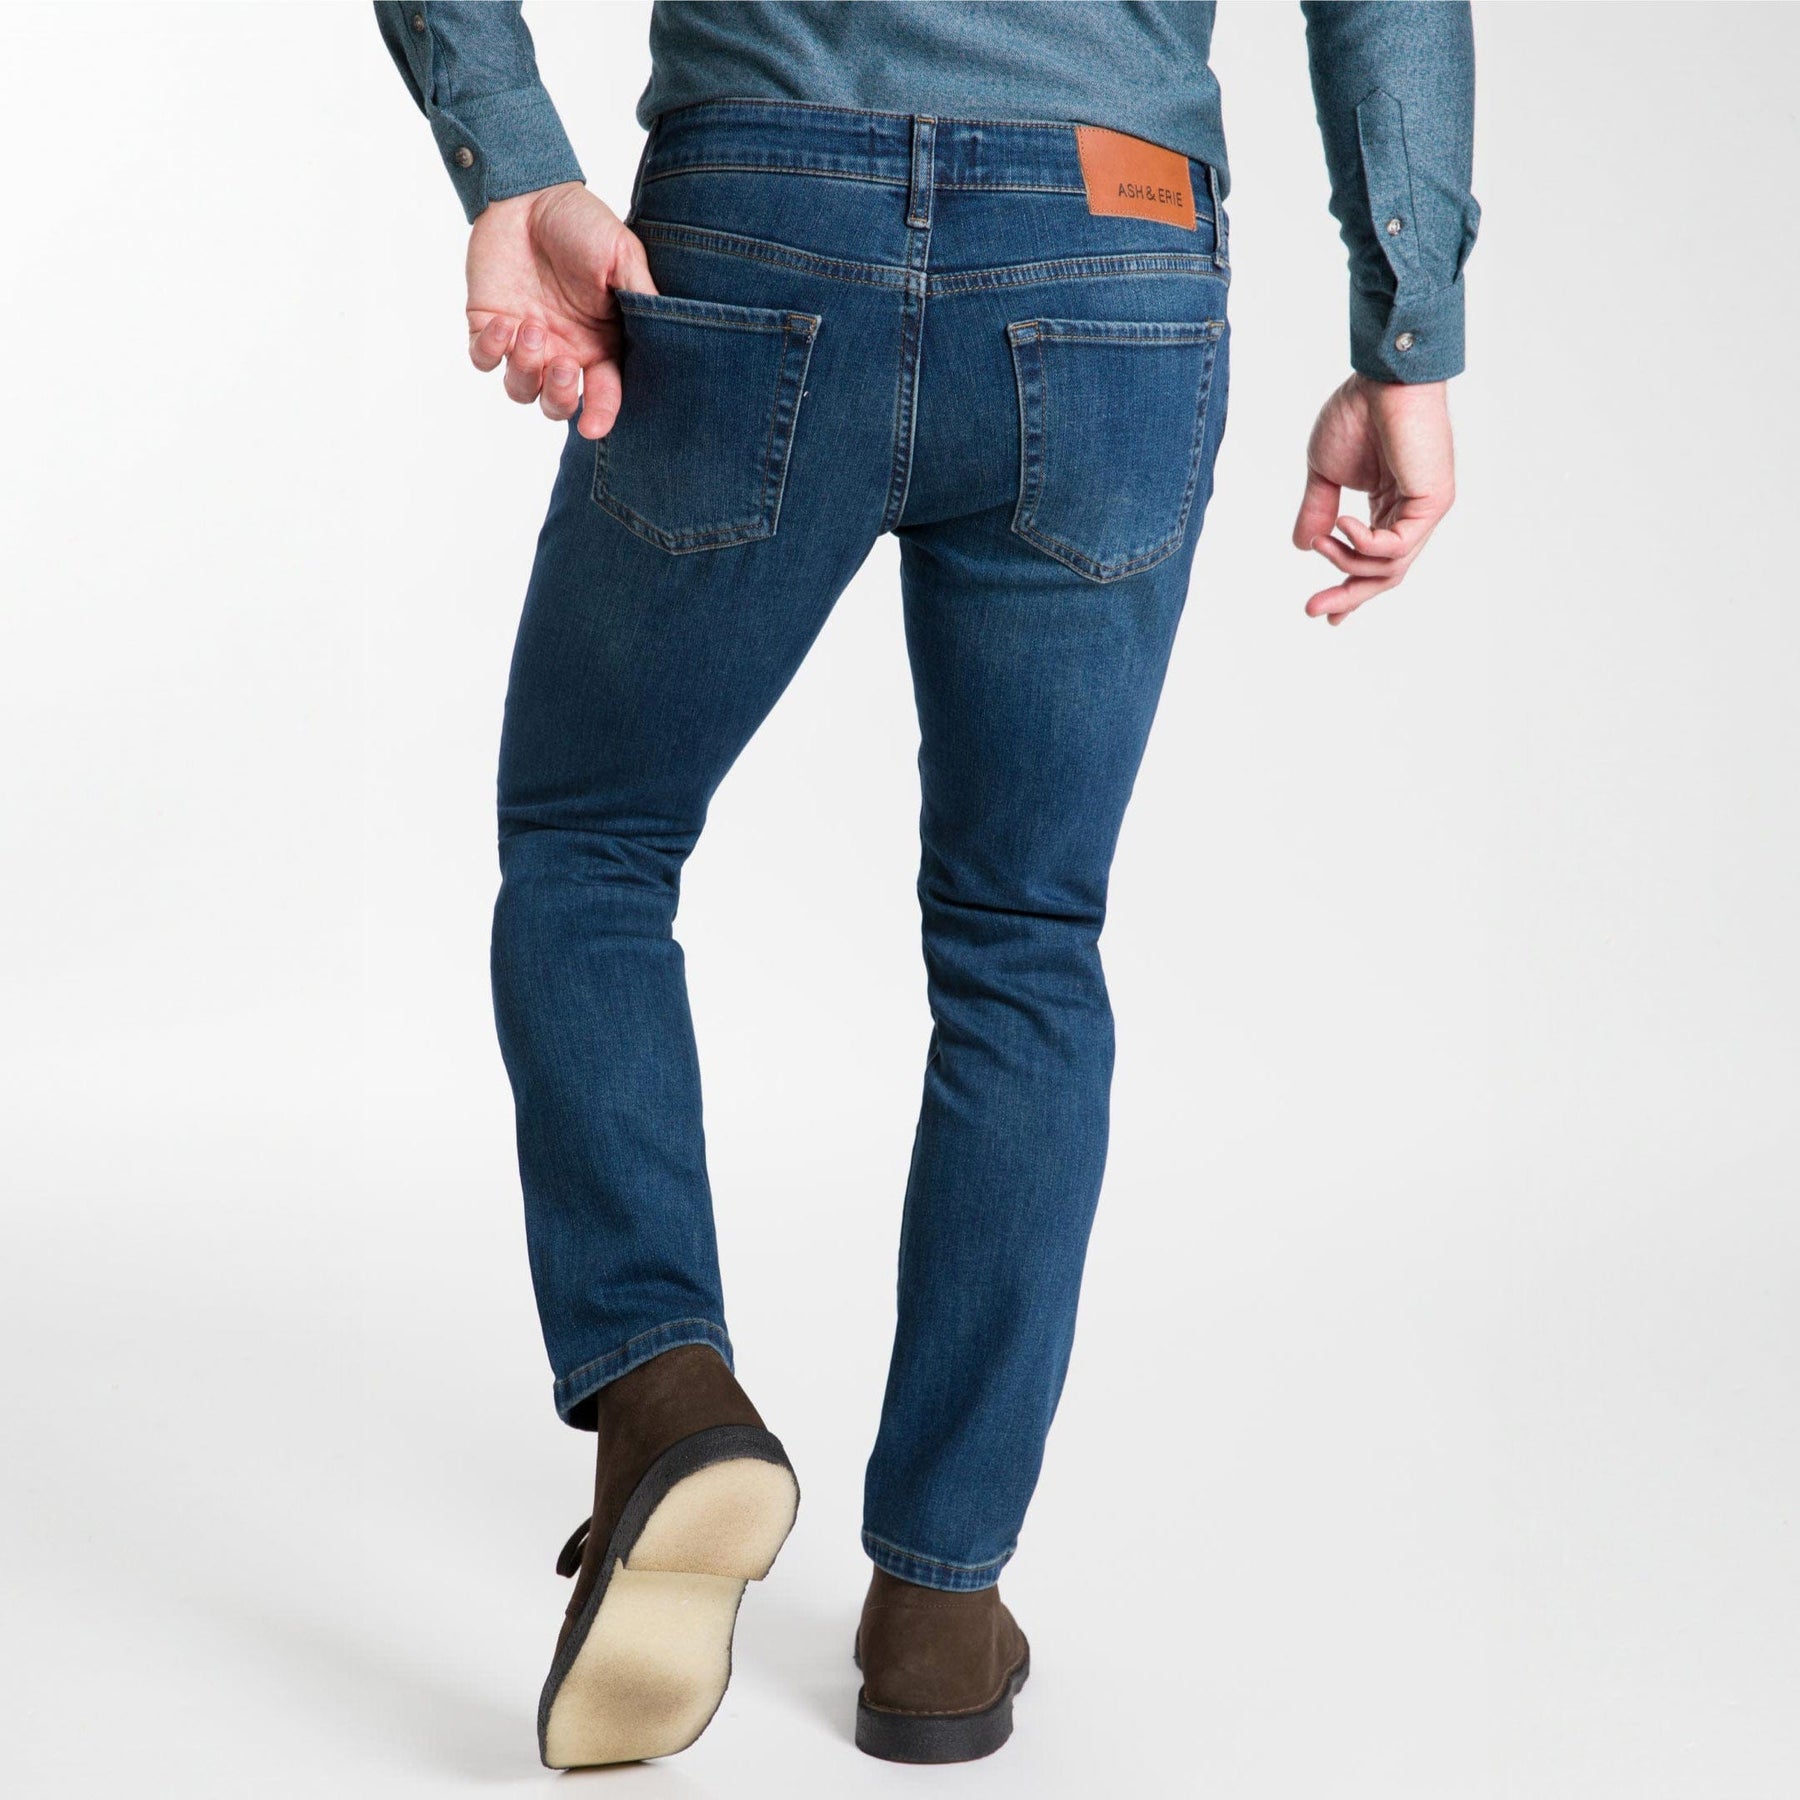 Ash & Erie Original Wash Midtown Jeans for Short Men